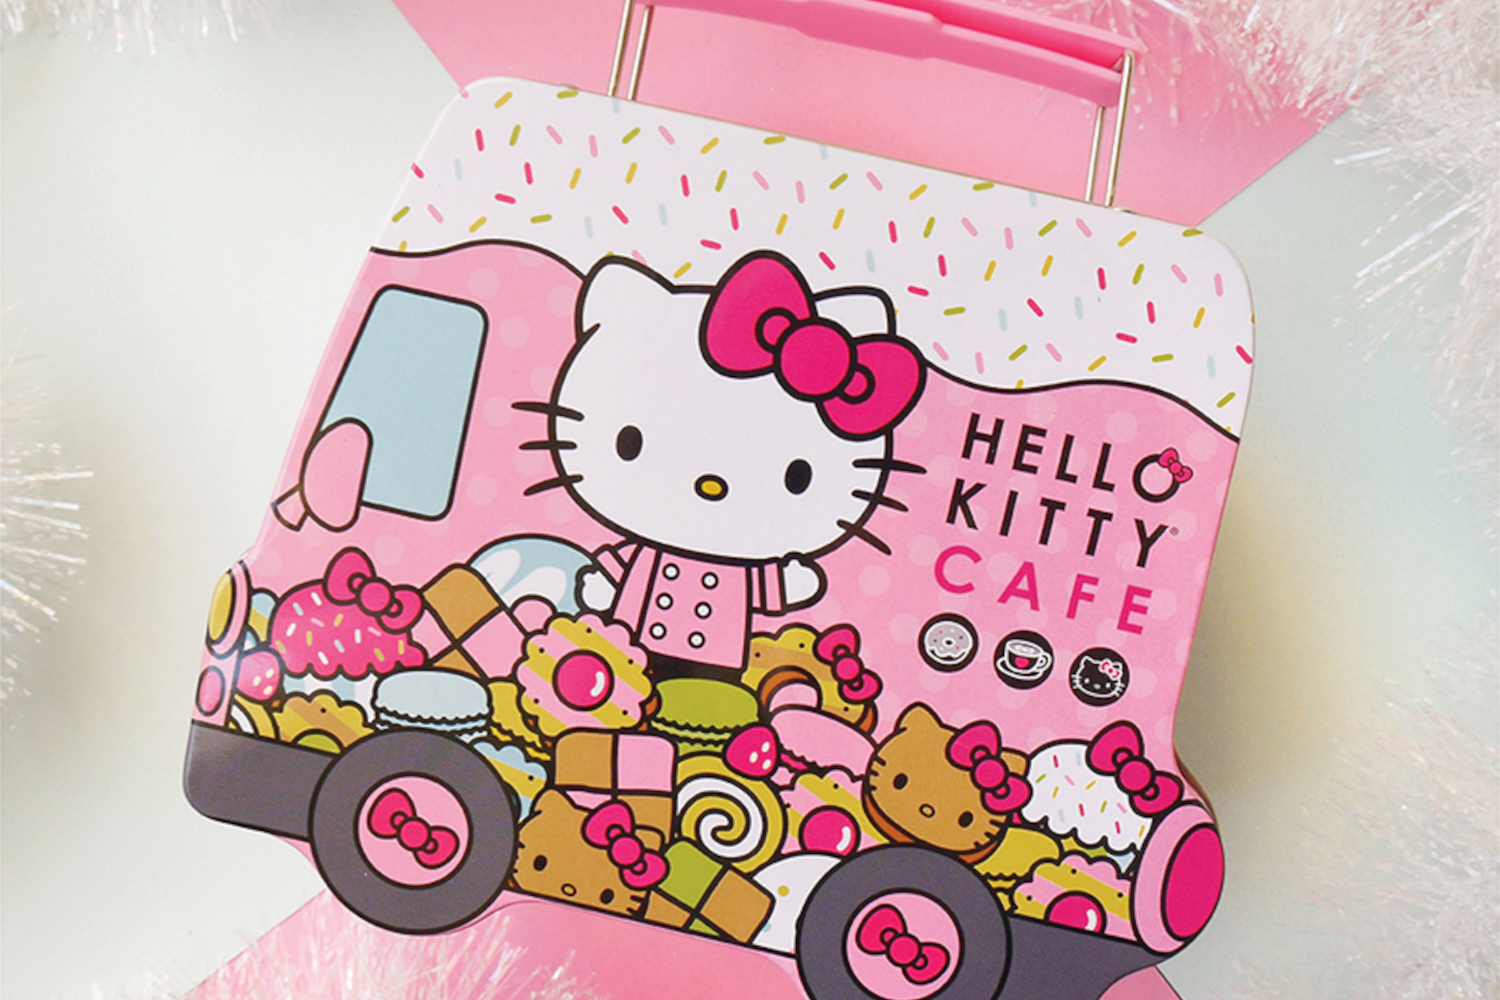 Hello Kitty brings sweet treats to Las Vegas opening — PHOTOS